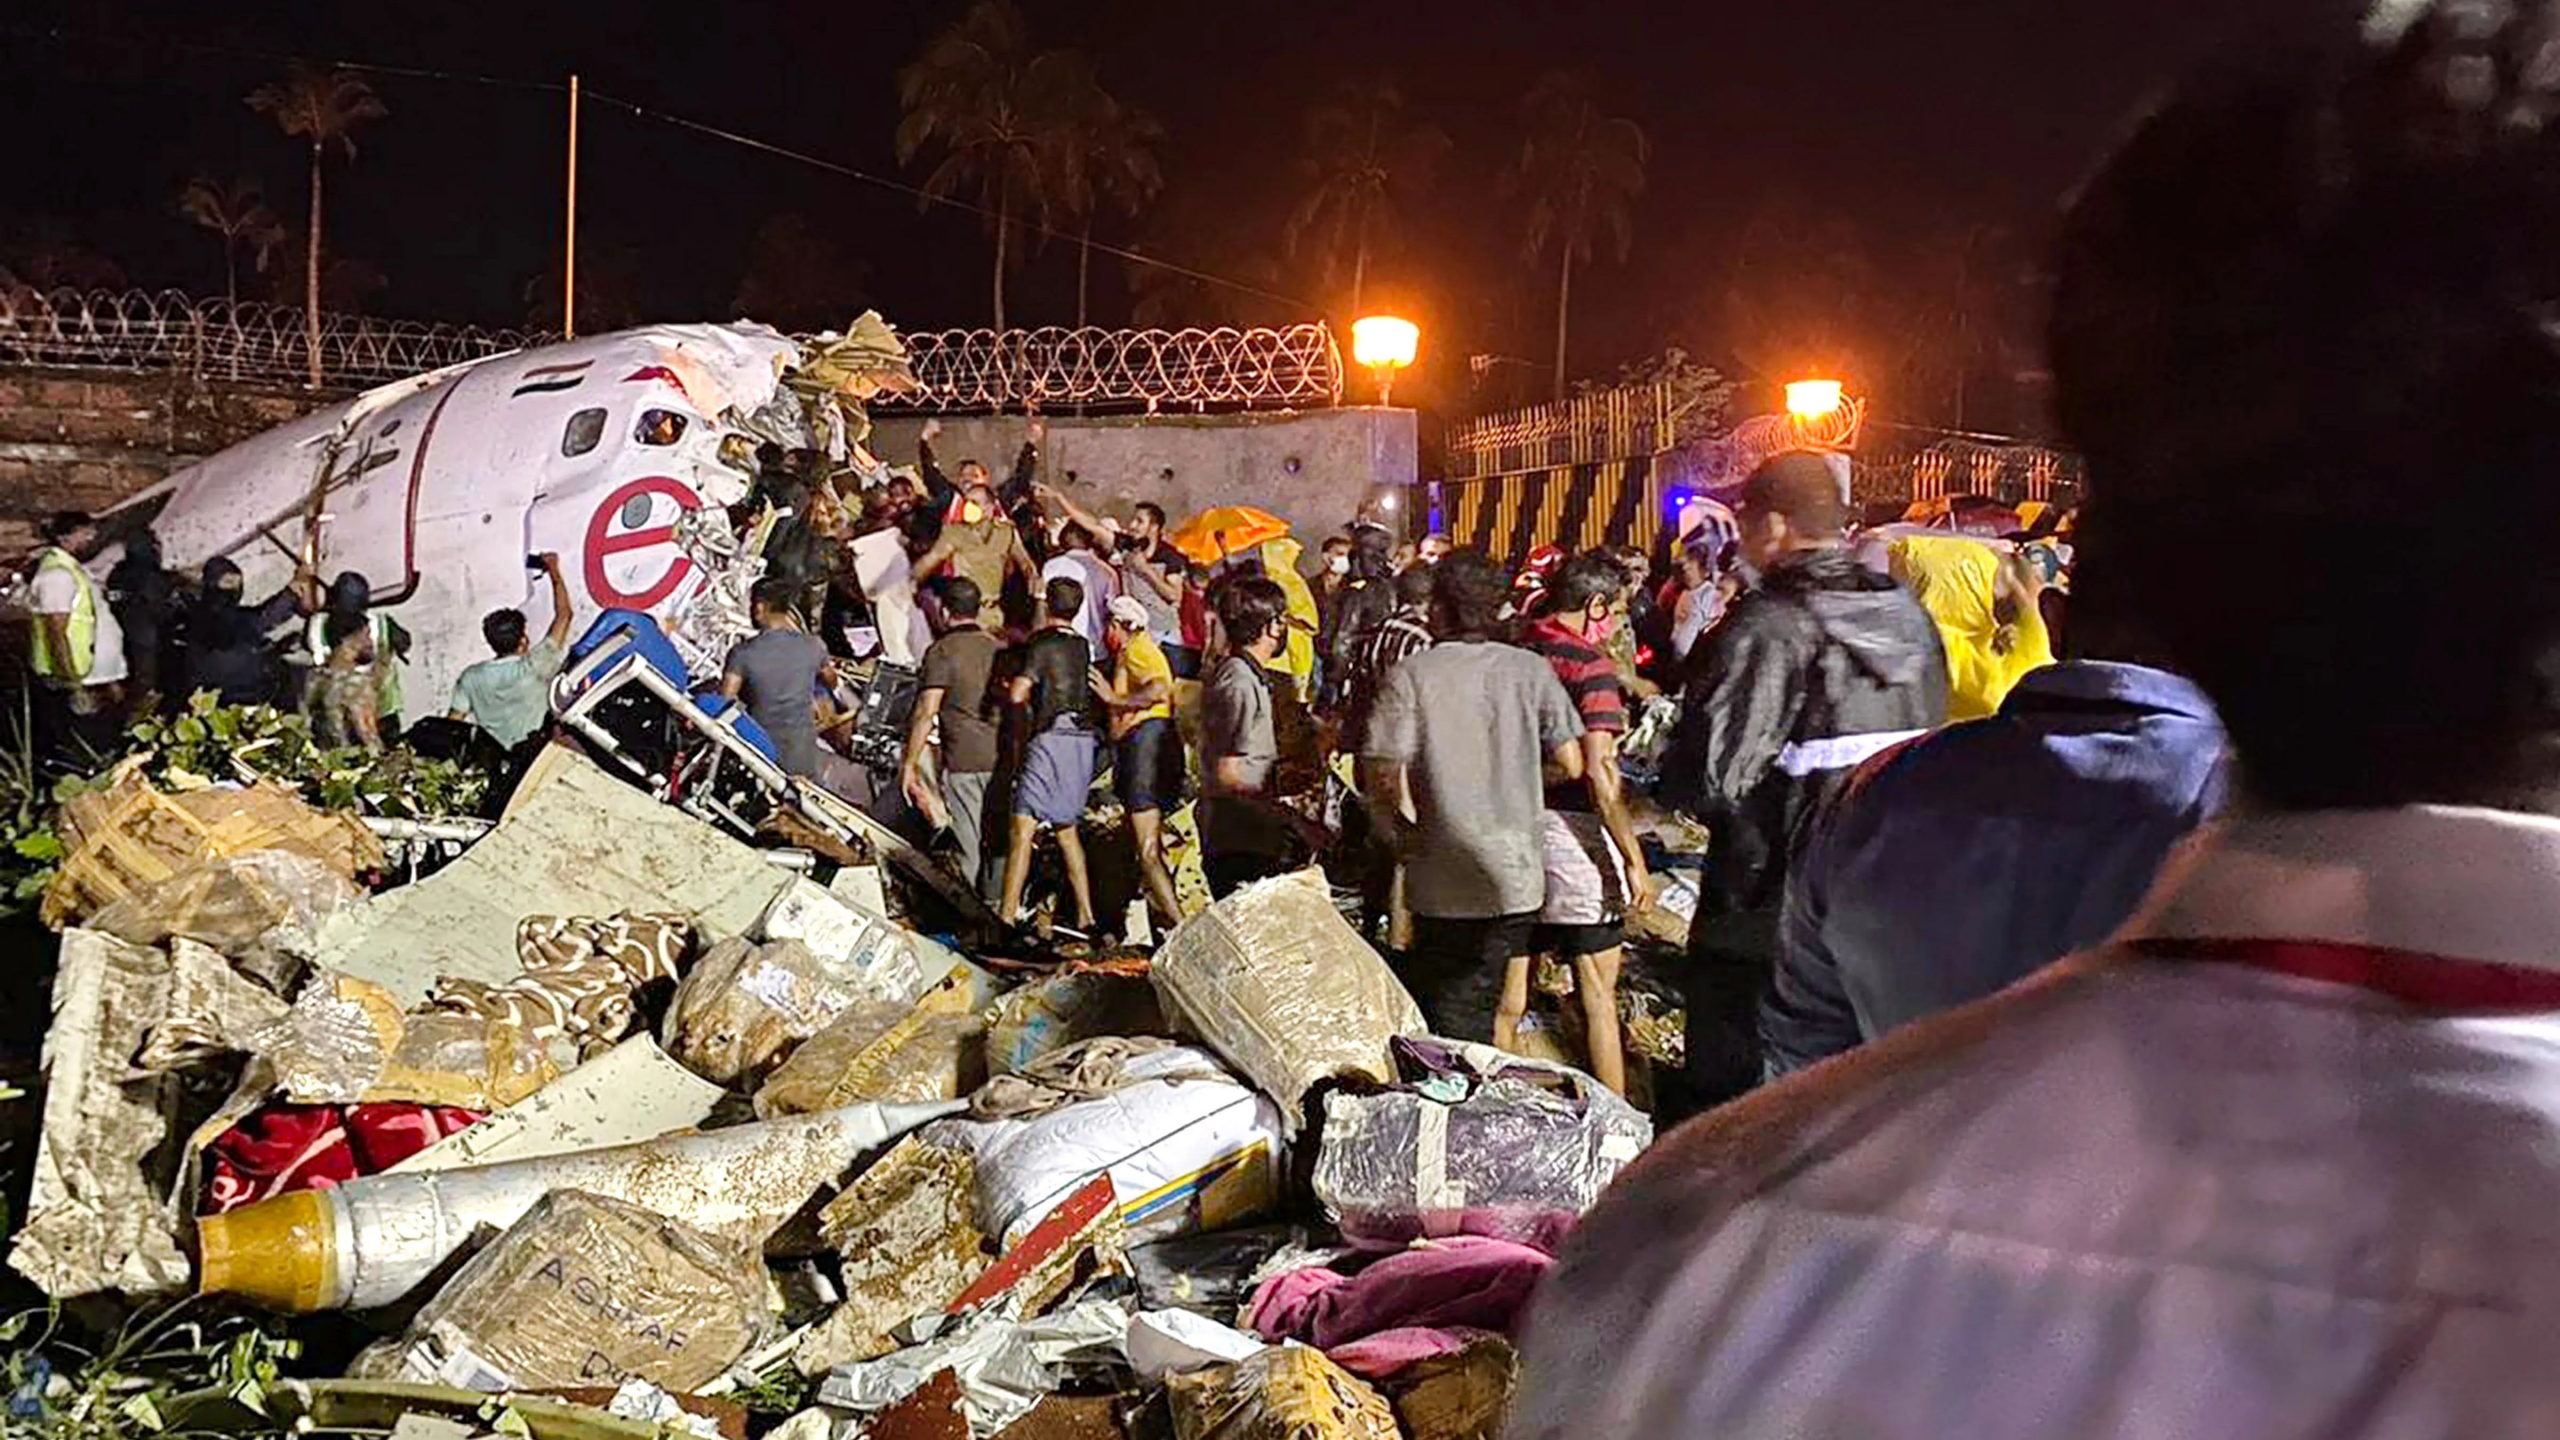 Kozhikode airport crash: 16 killed after Air India flight overshoots runway